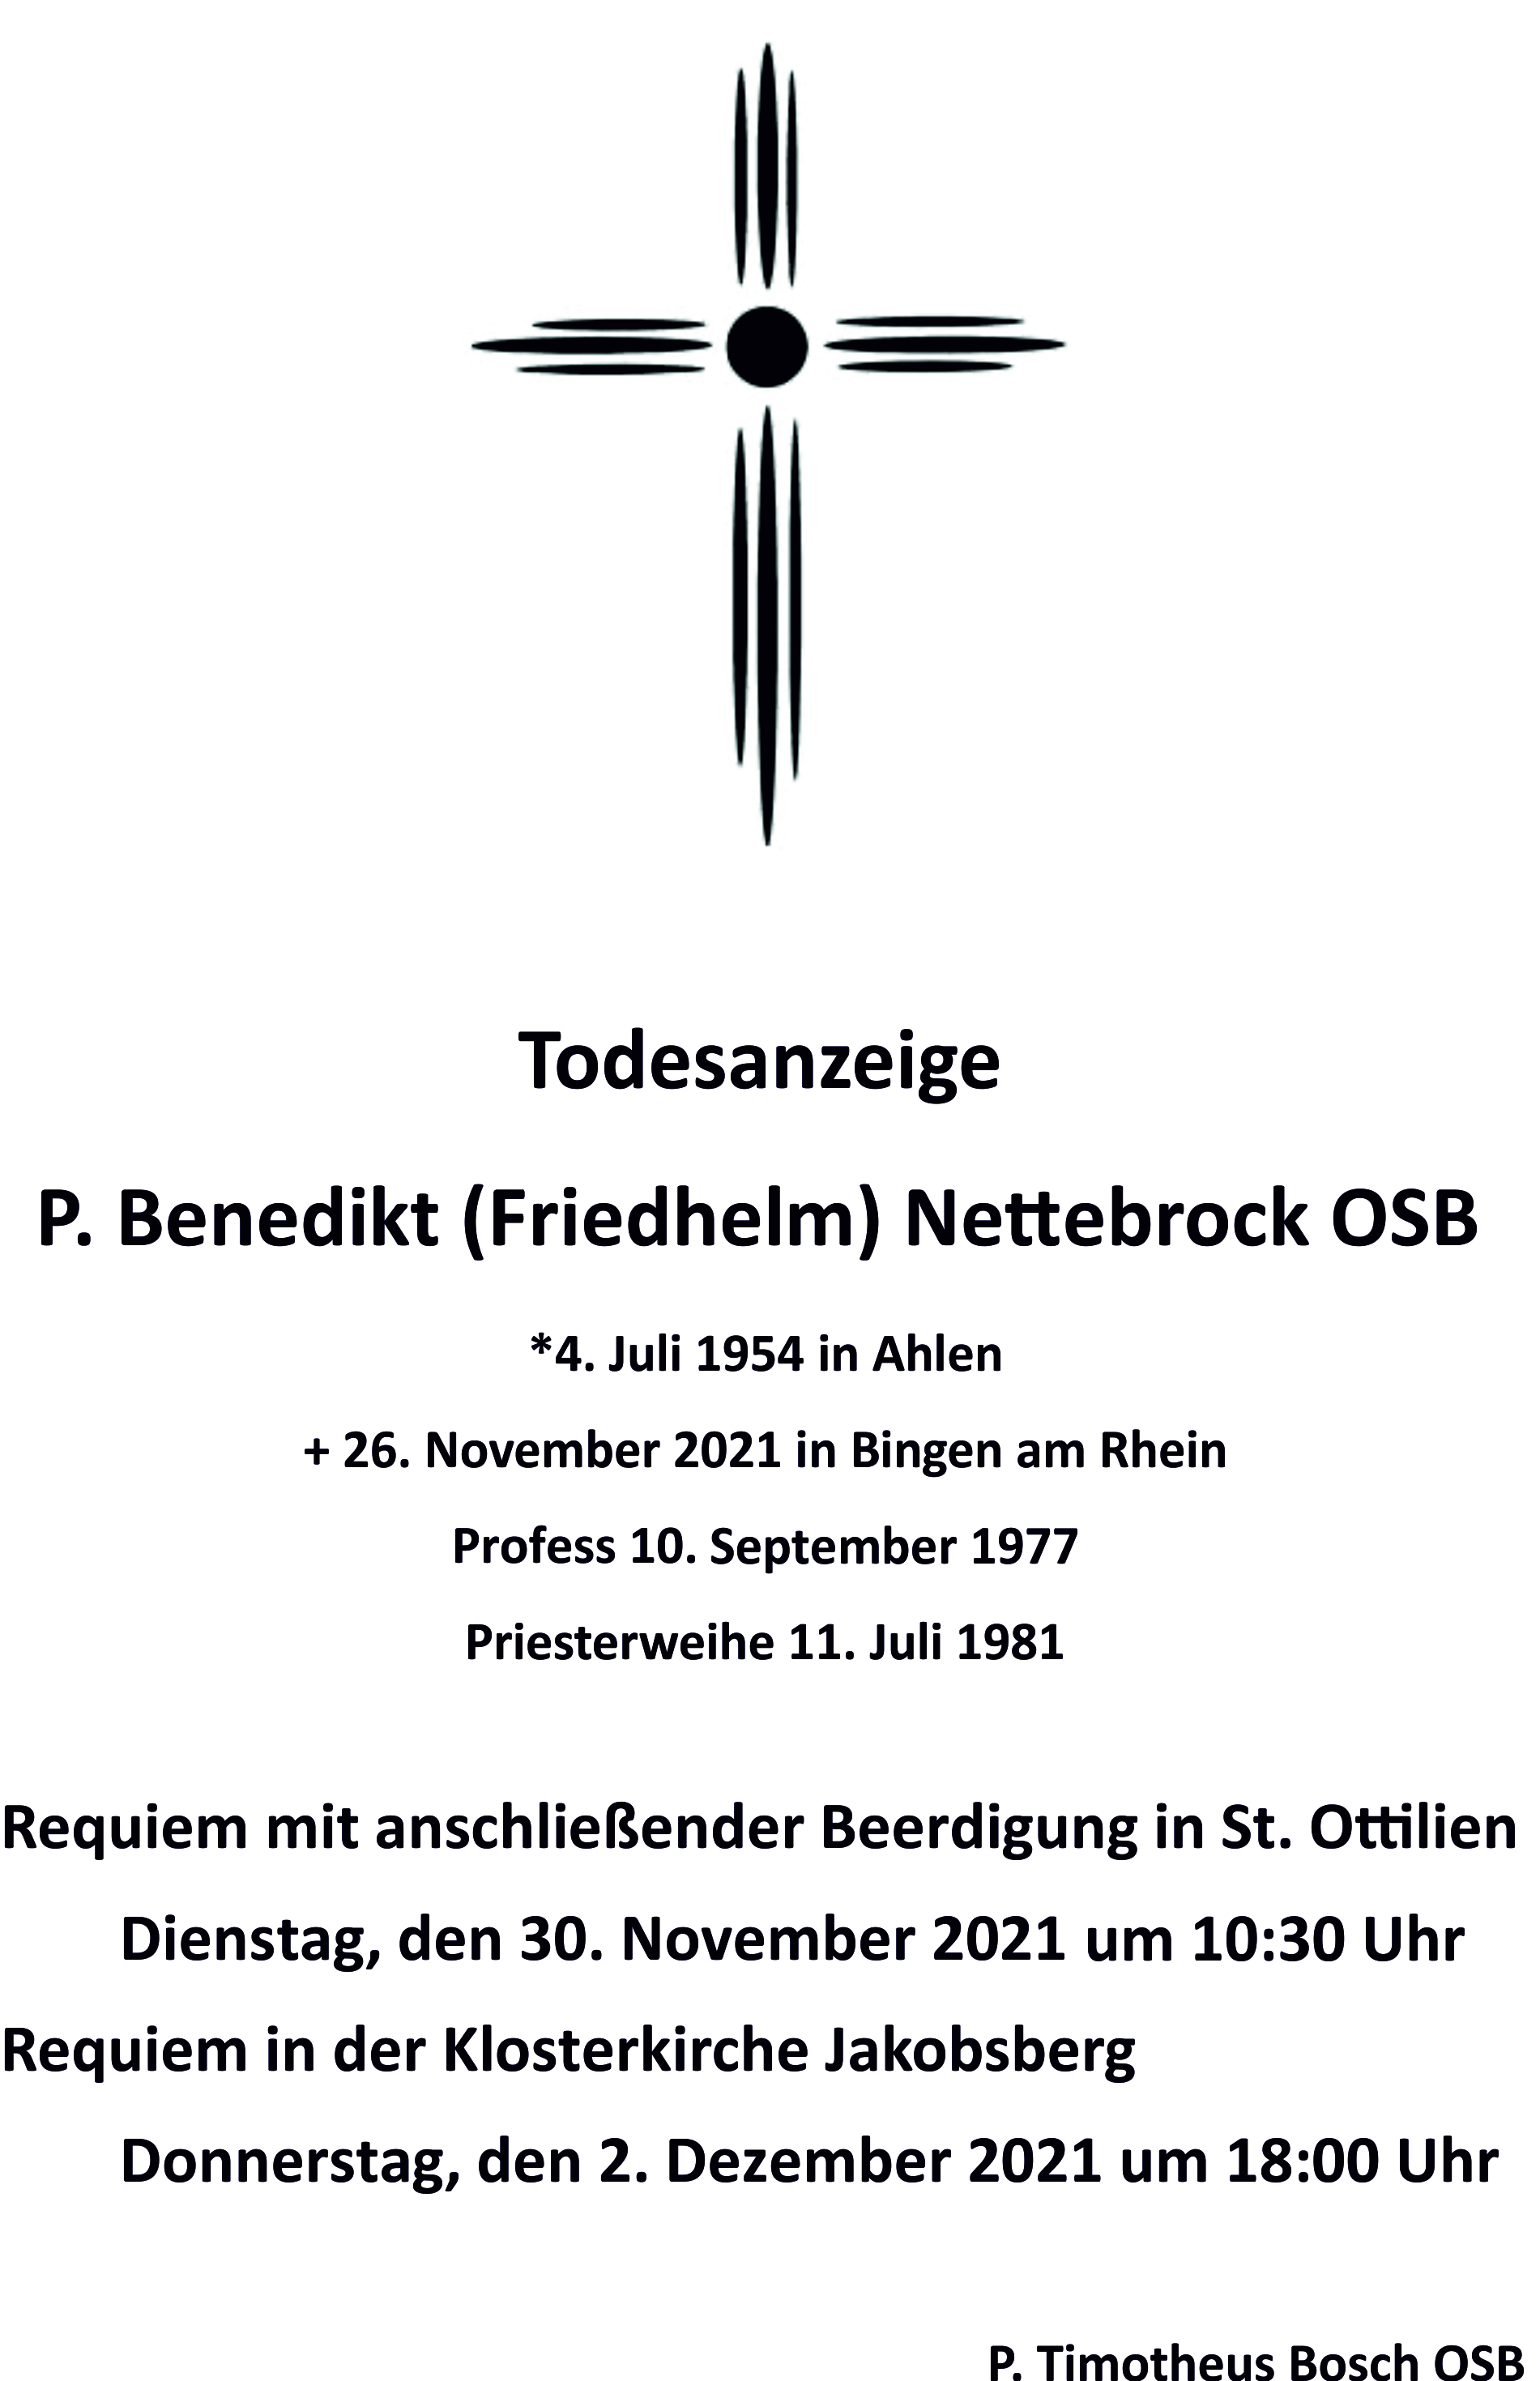 Todesanzeige_P.Benedikt (c) Kloster Jakobsberg